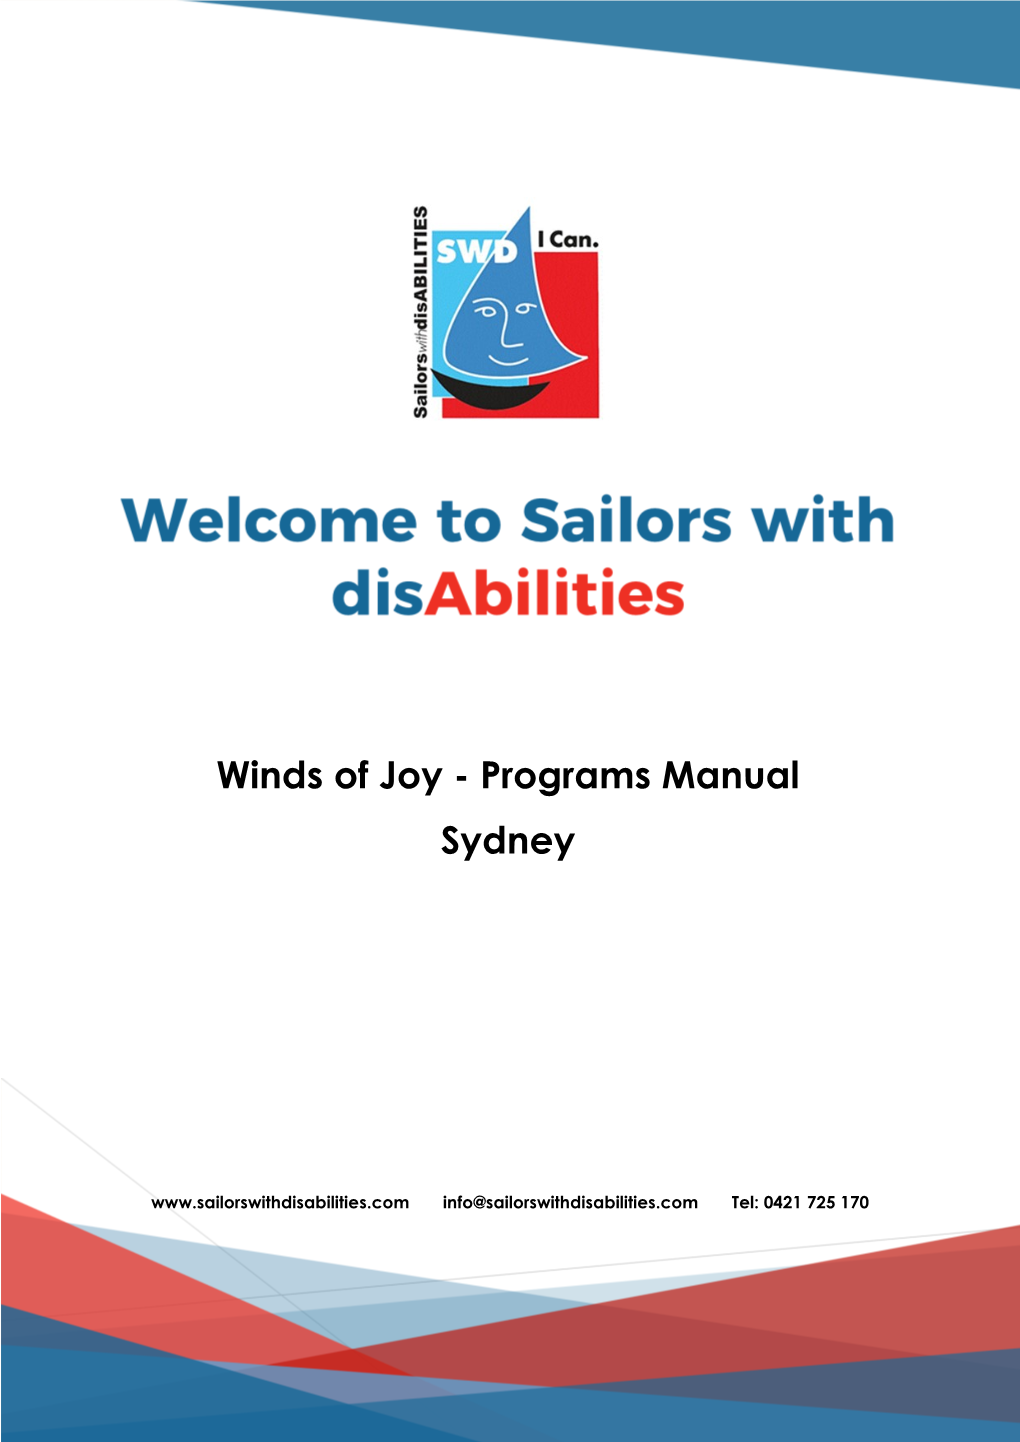 Winds of Joy - Programs Manual Sydney